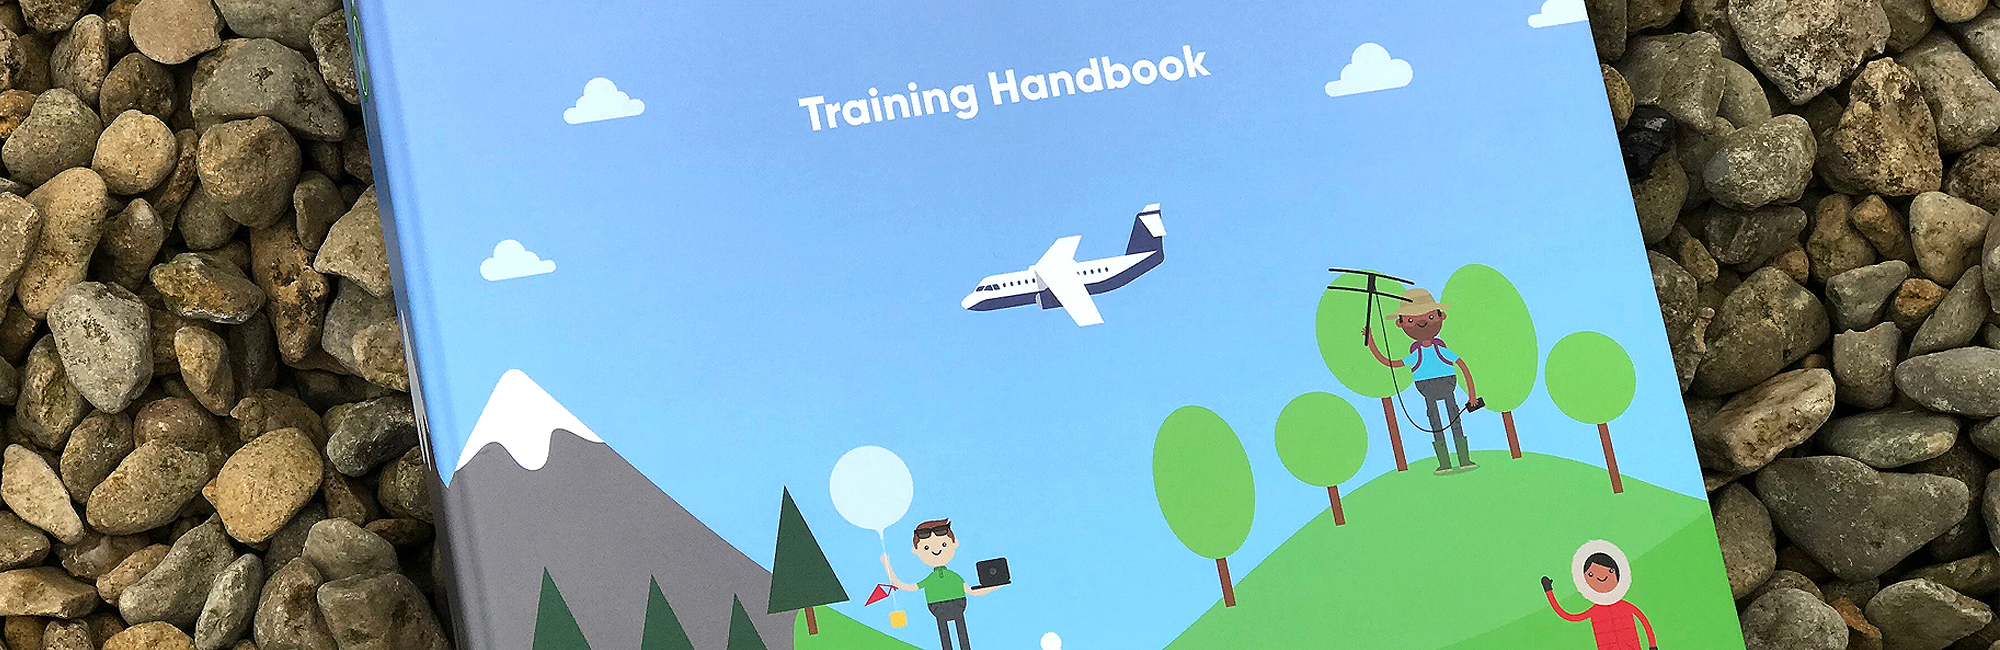 Operation Earth Training Handbook